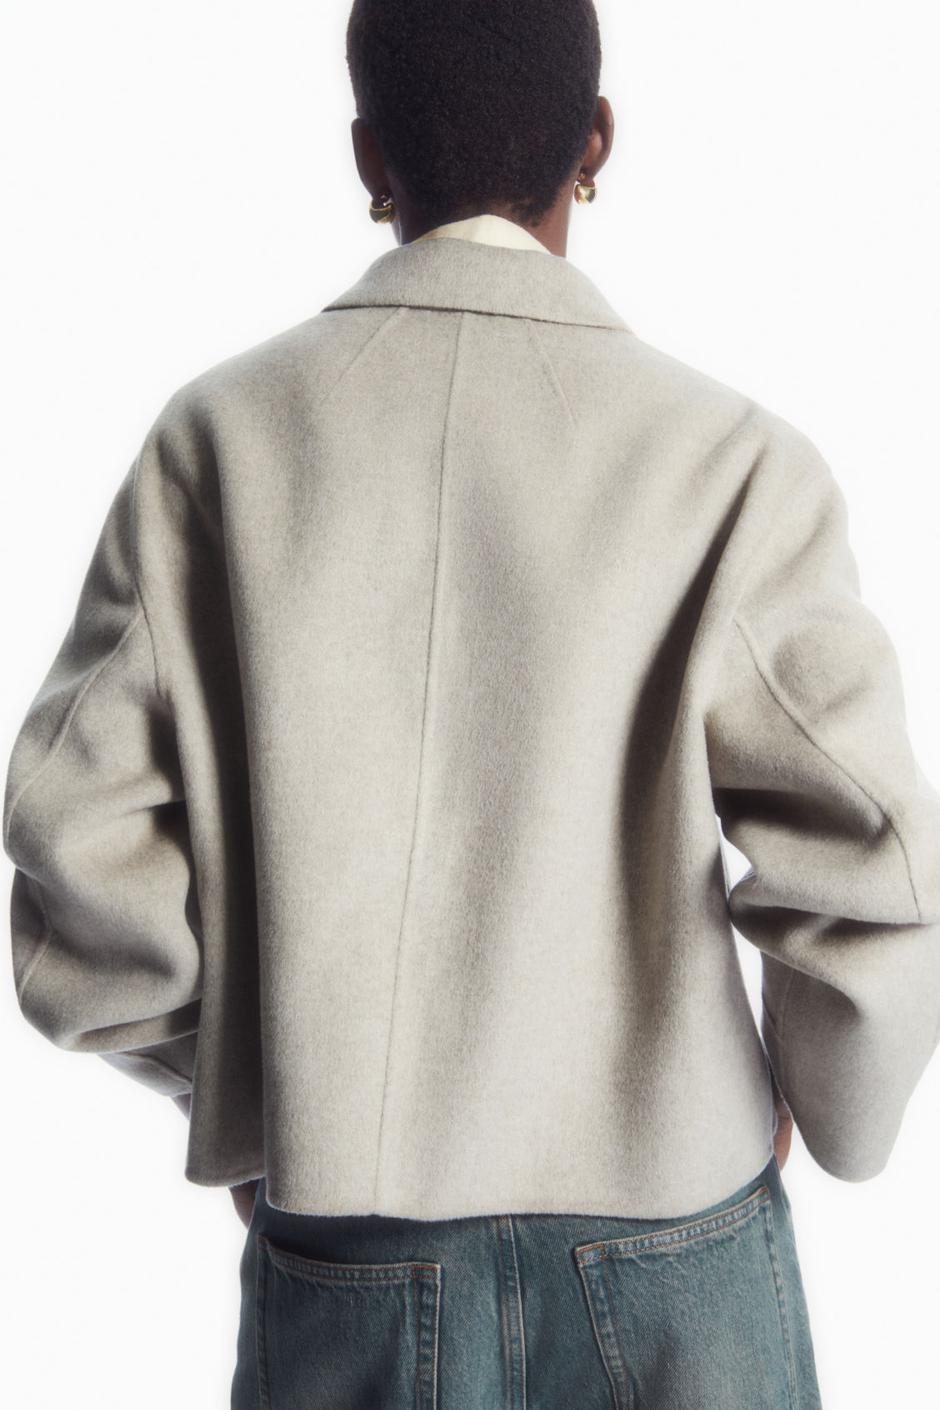 Foto: COS, jakna od vune (150 eura) | Autor: 